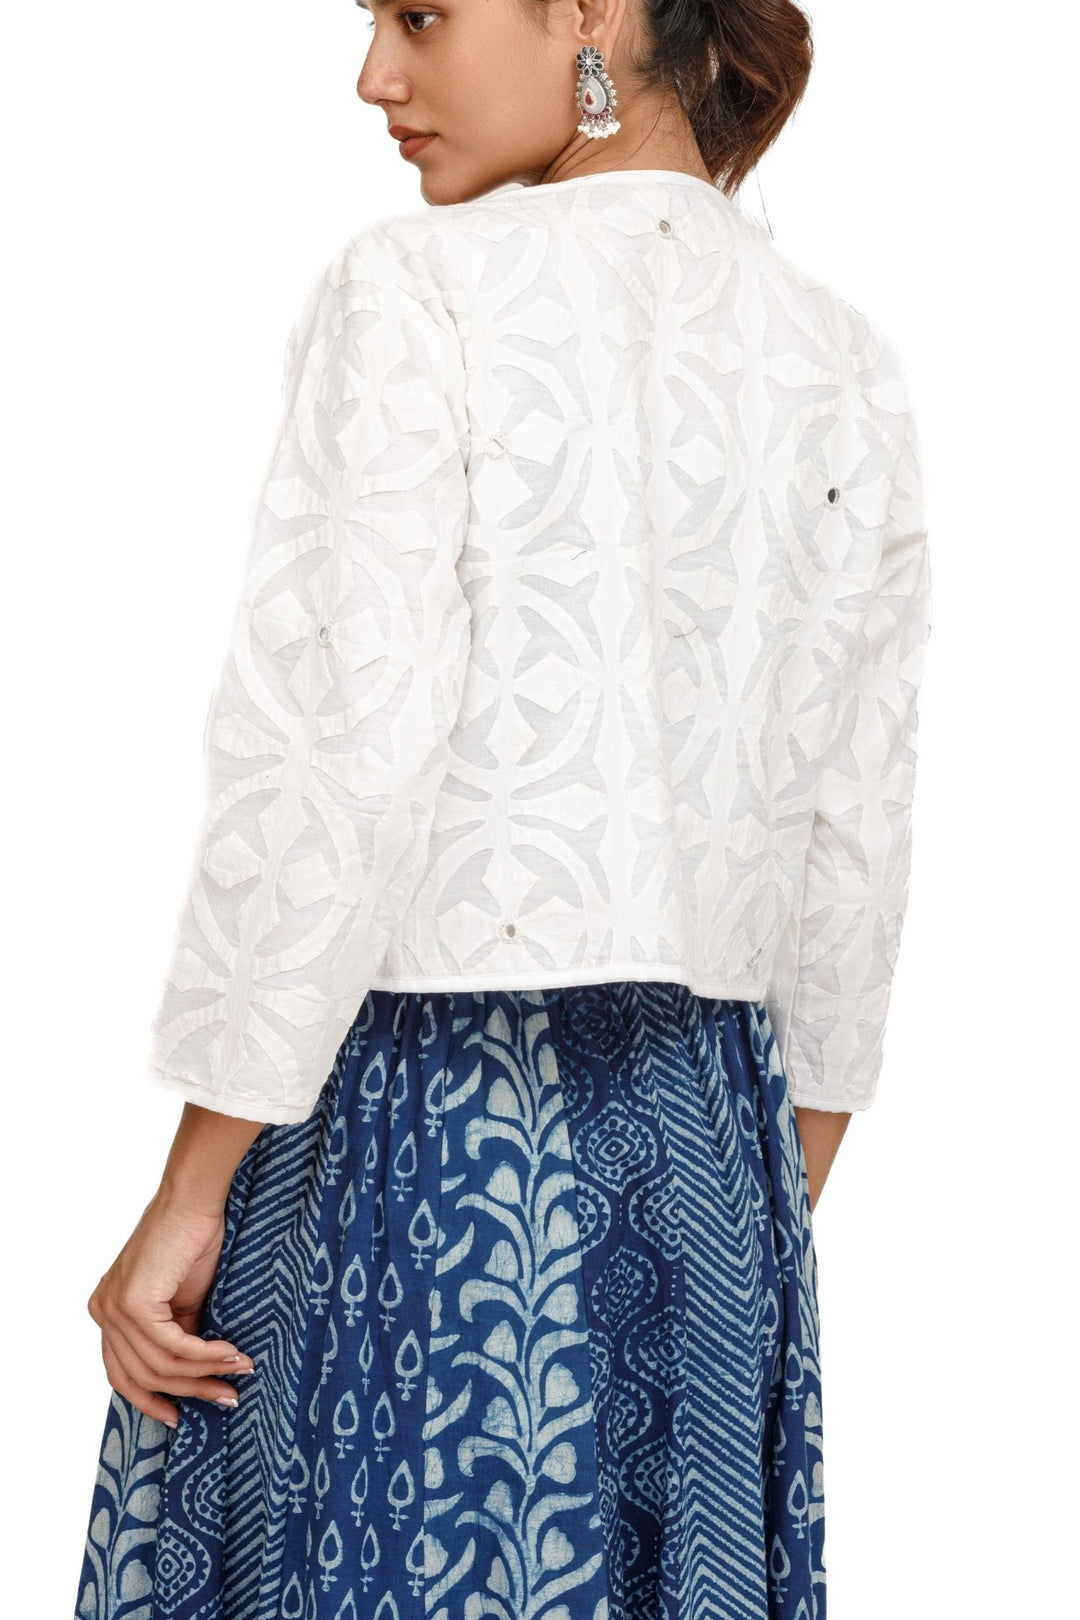 White Applique Short Shrug / Jacket - womenswear -